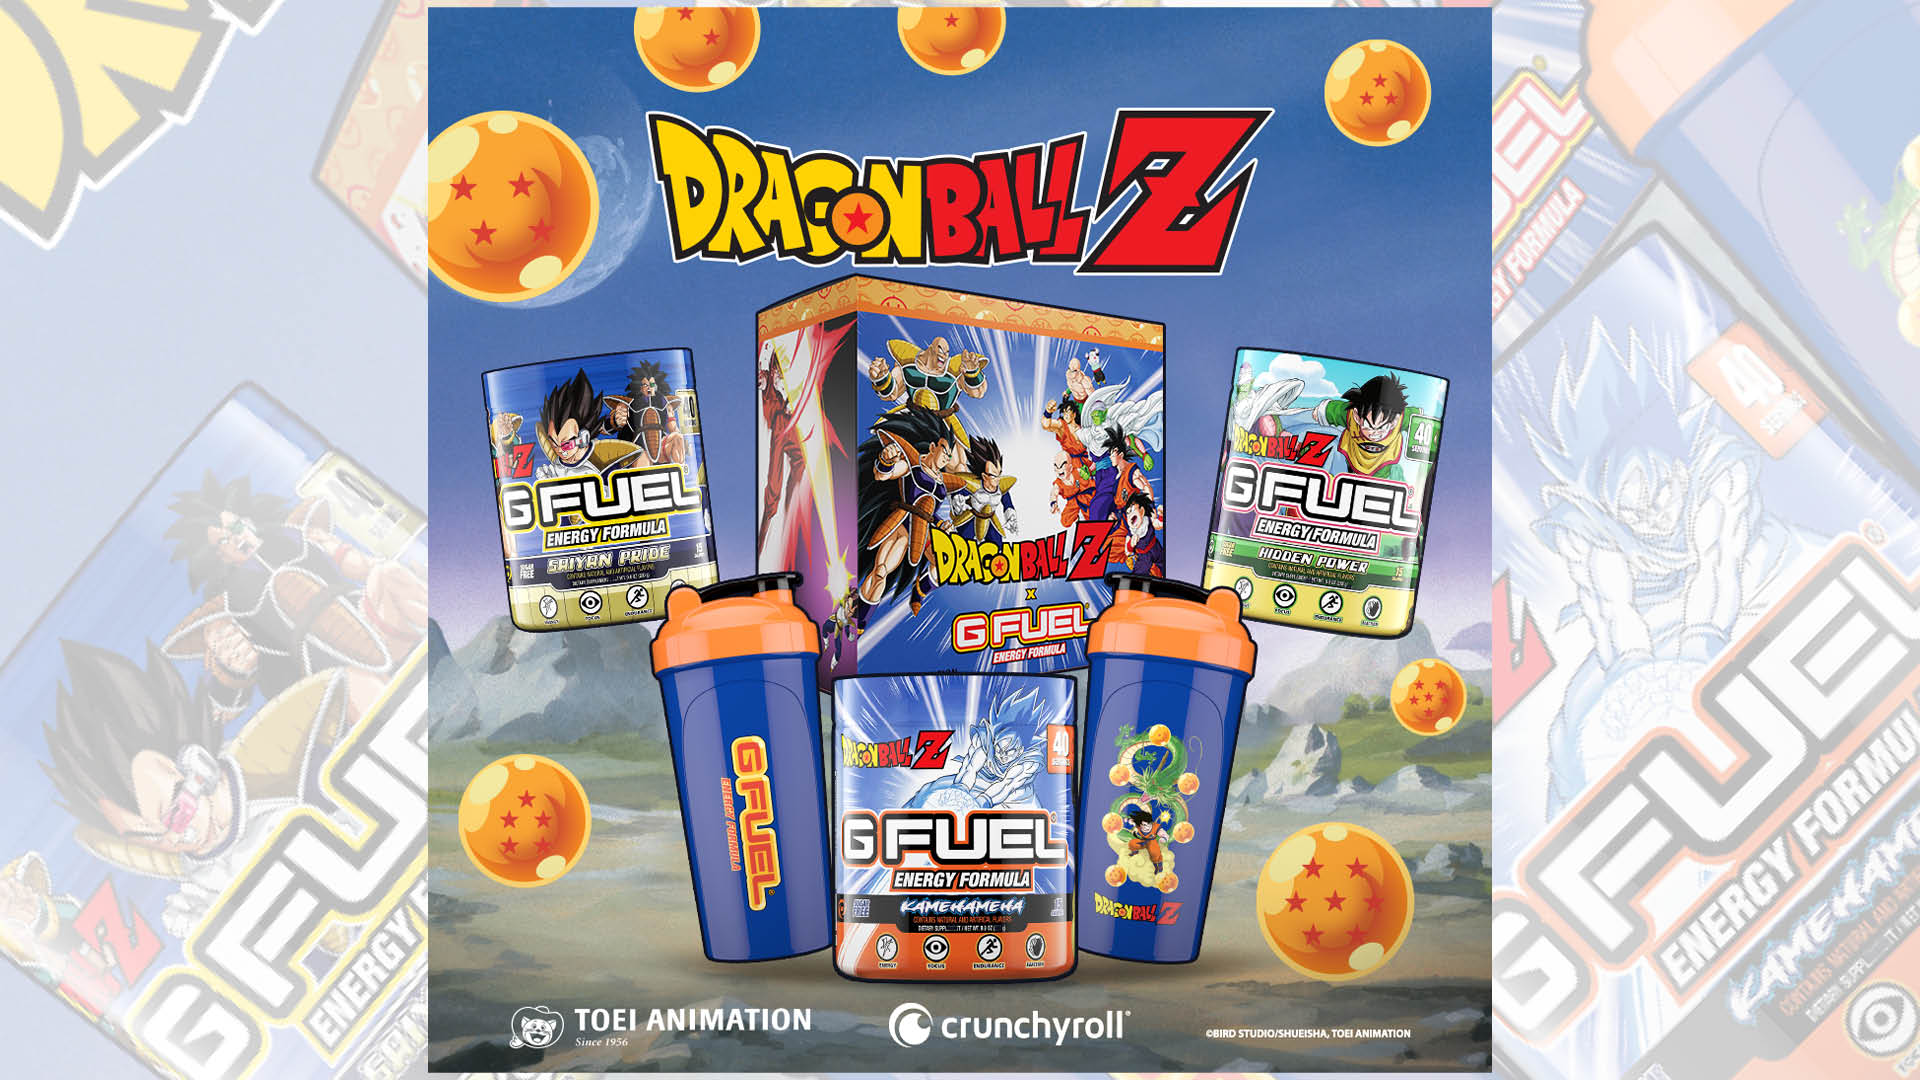 Dragon Ball Z popularity & fame